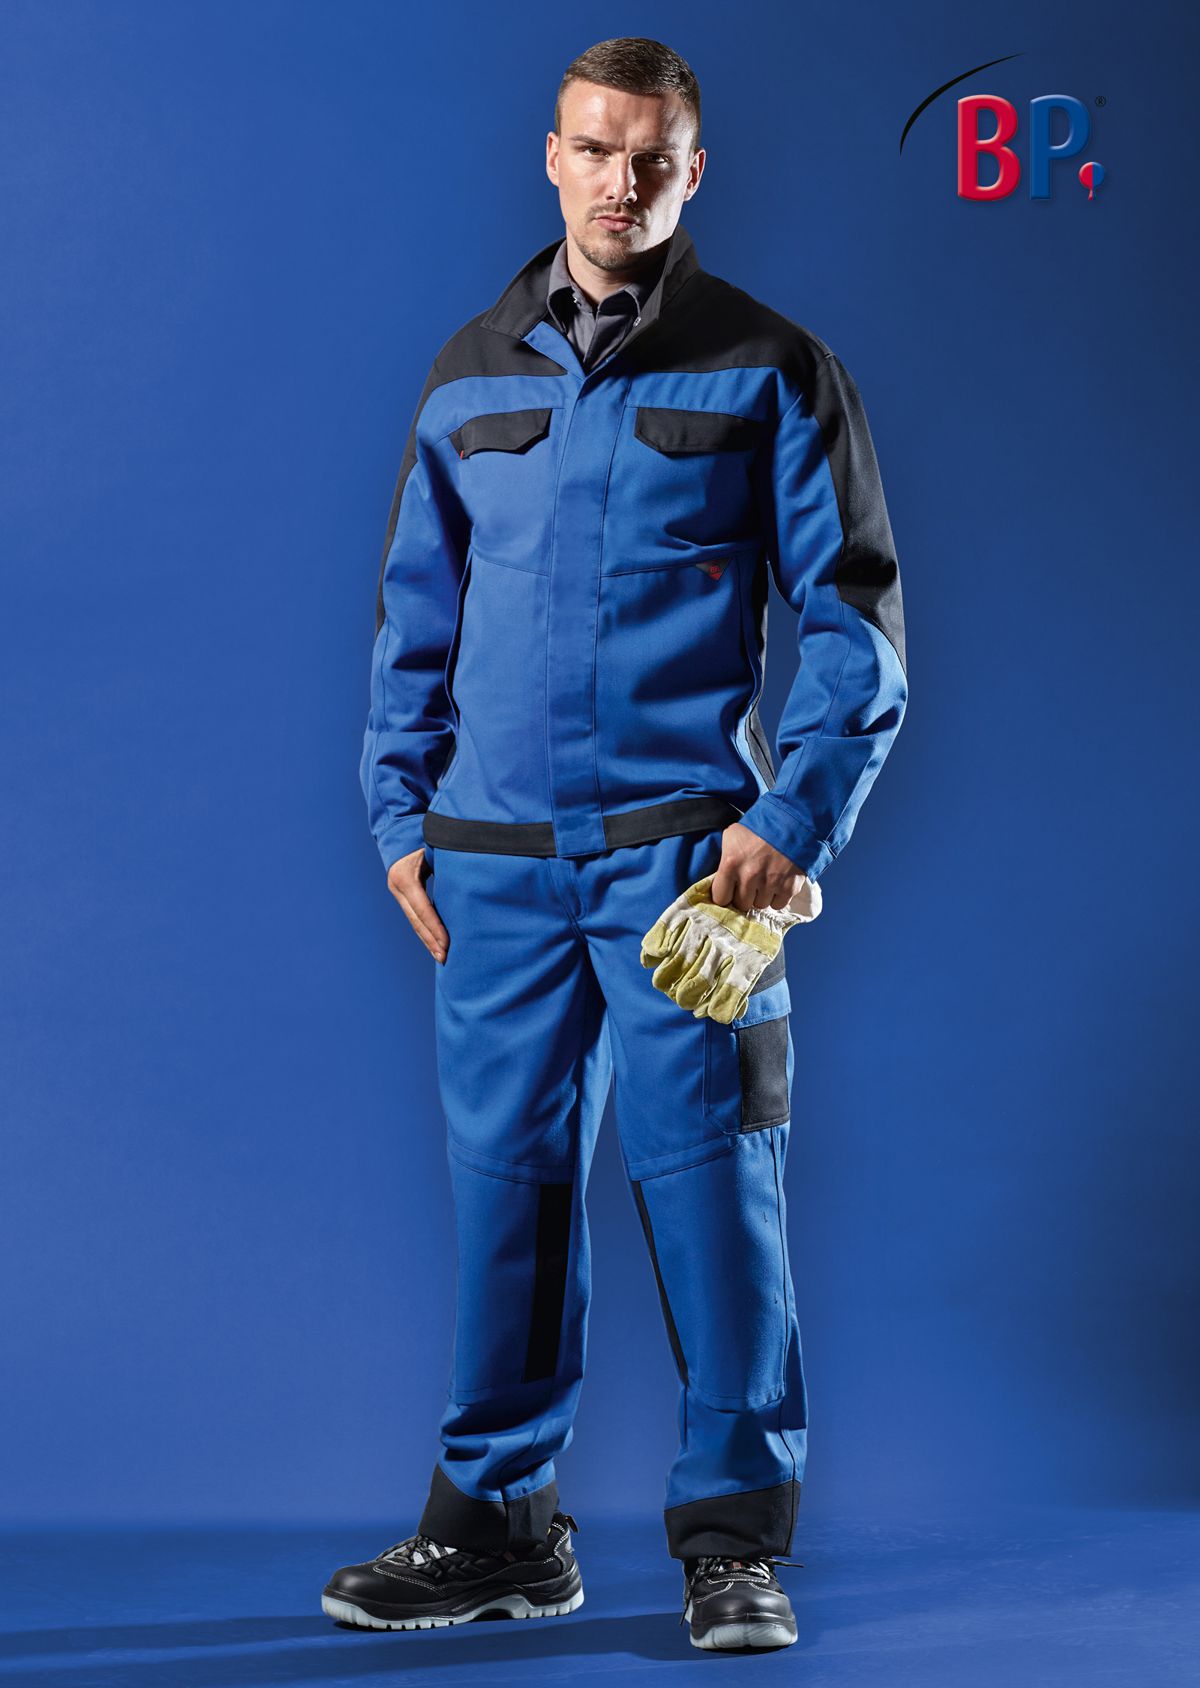 BP® Multi-standard APC2 jacket